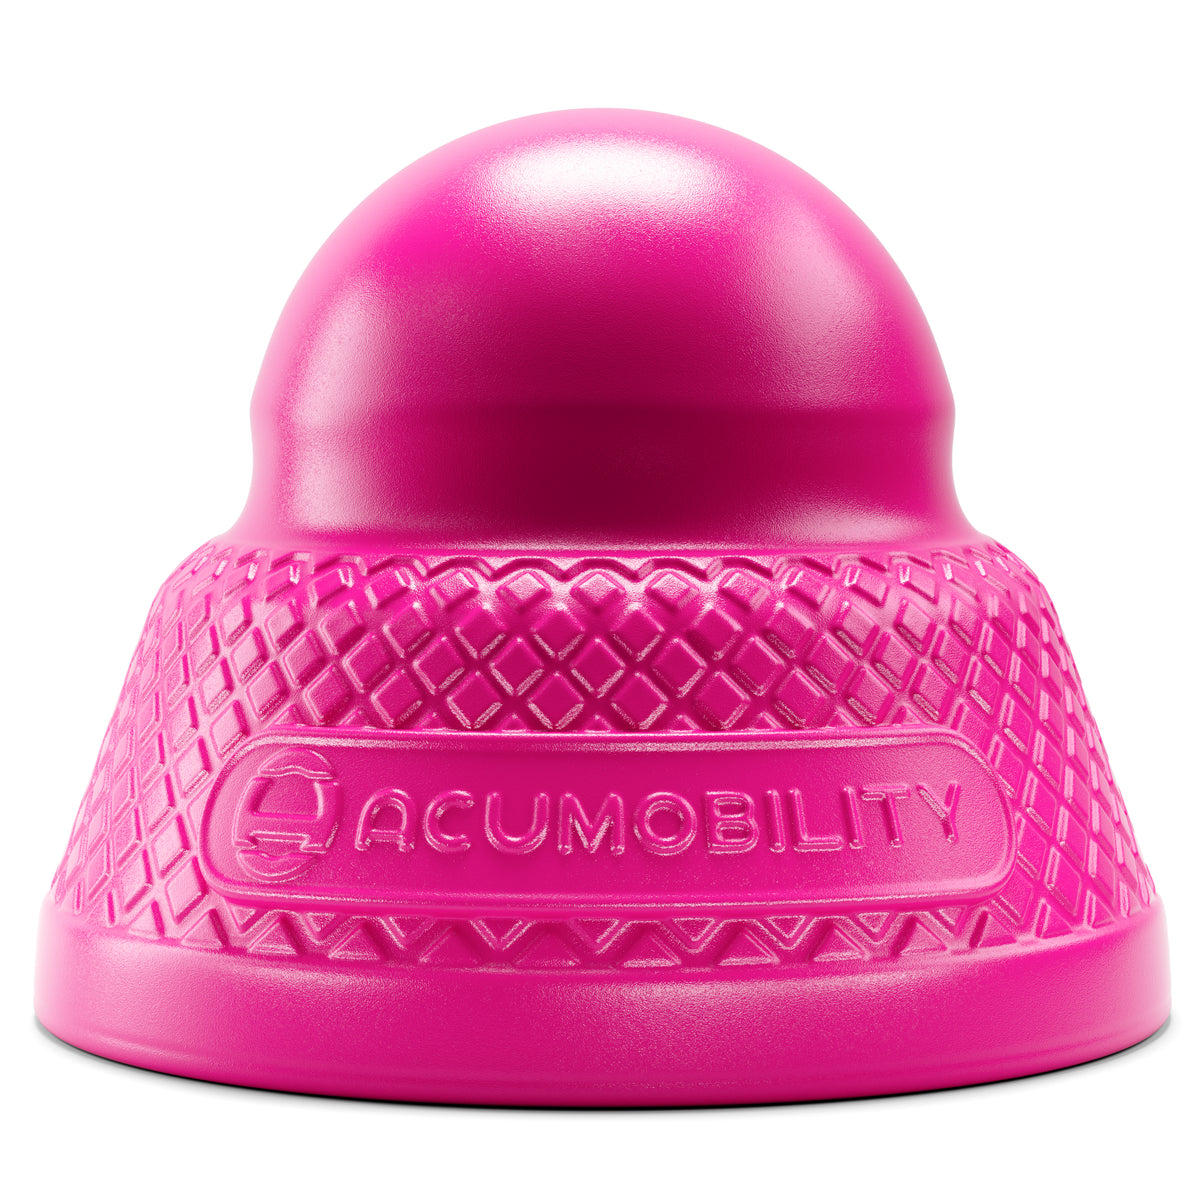 PINK Acumobility Ball